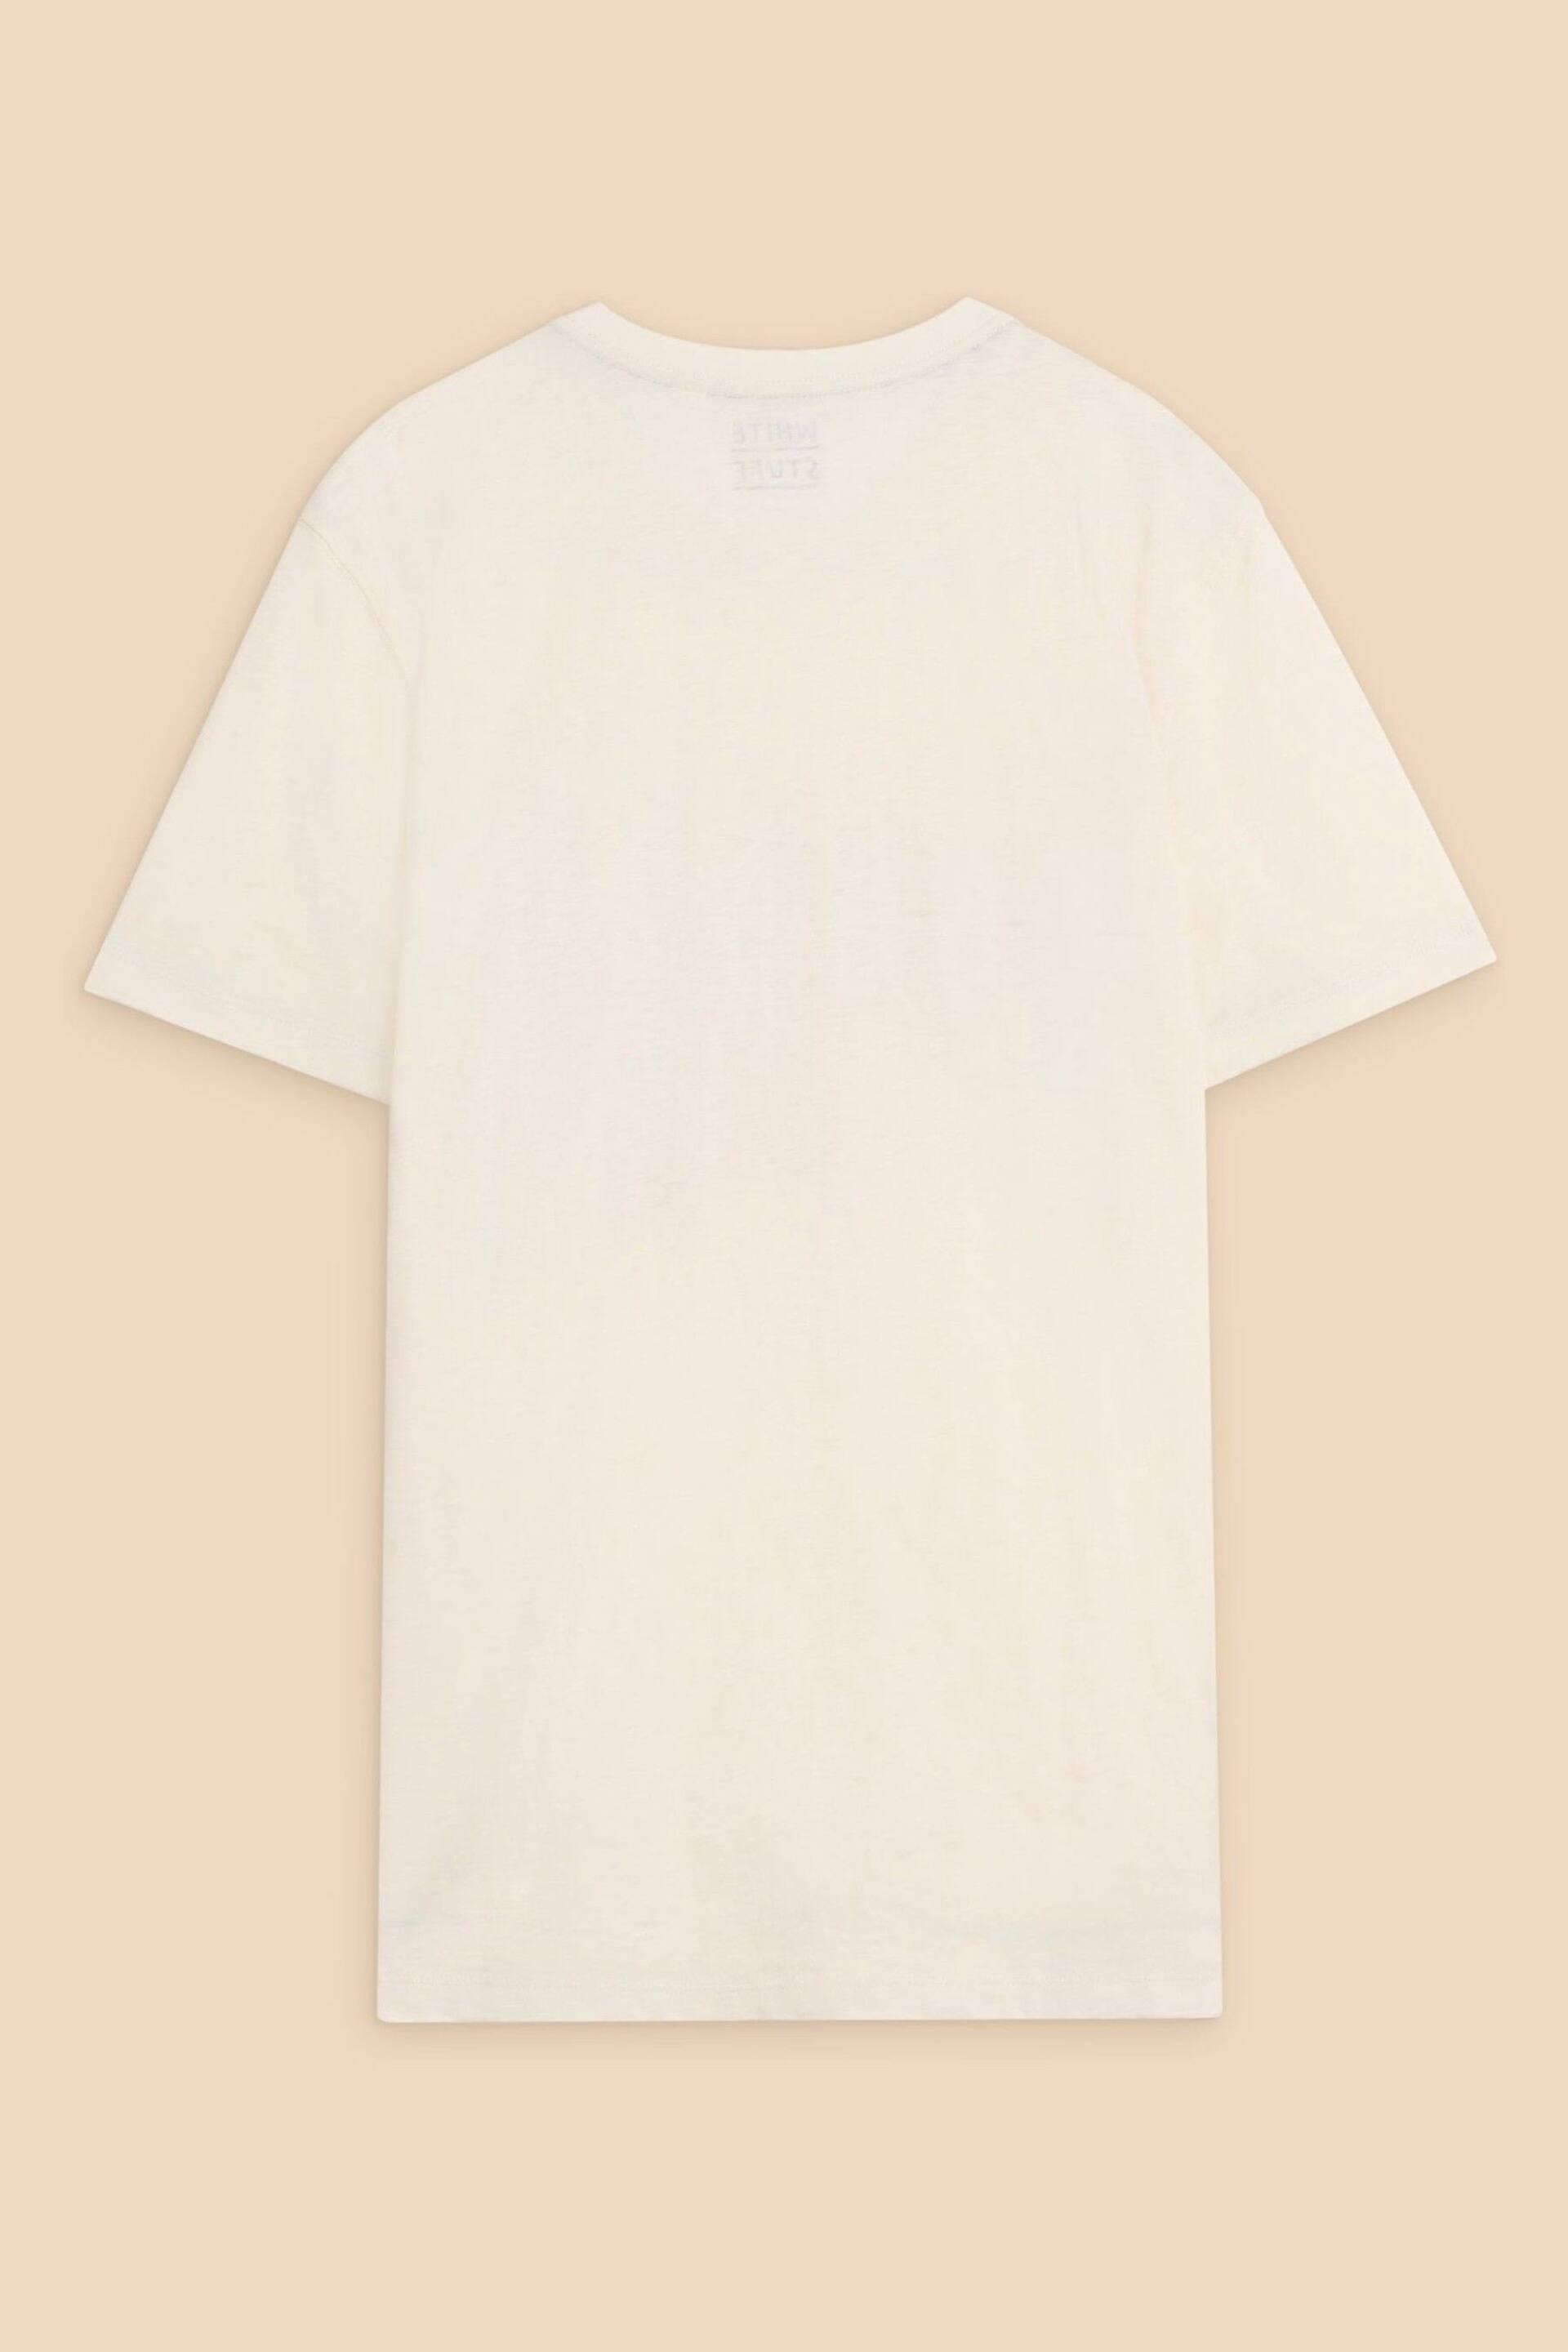 White Stuff White Morocco Graphic T-Shirt - Image 6 of 7